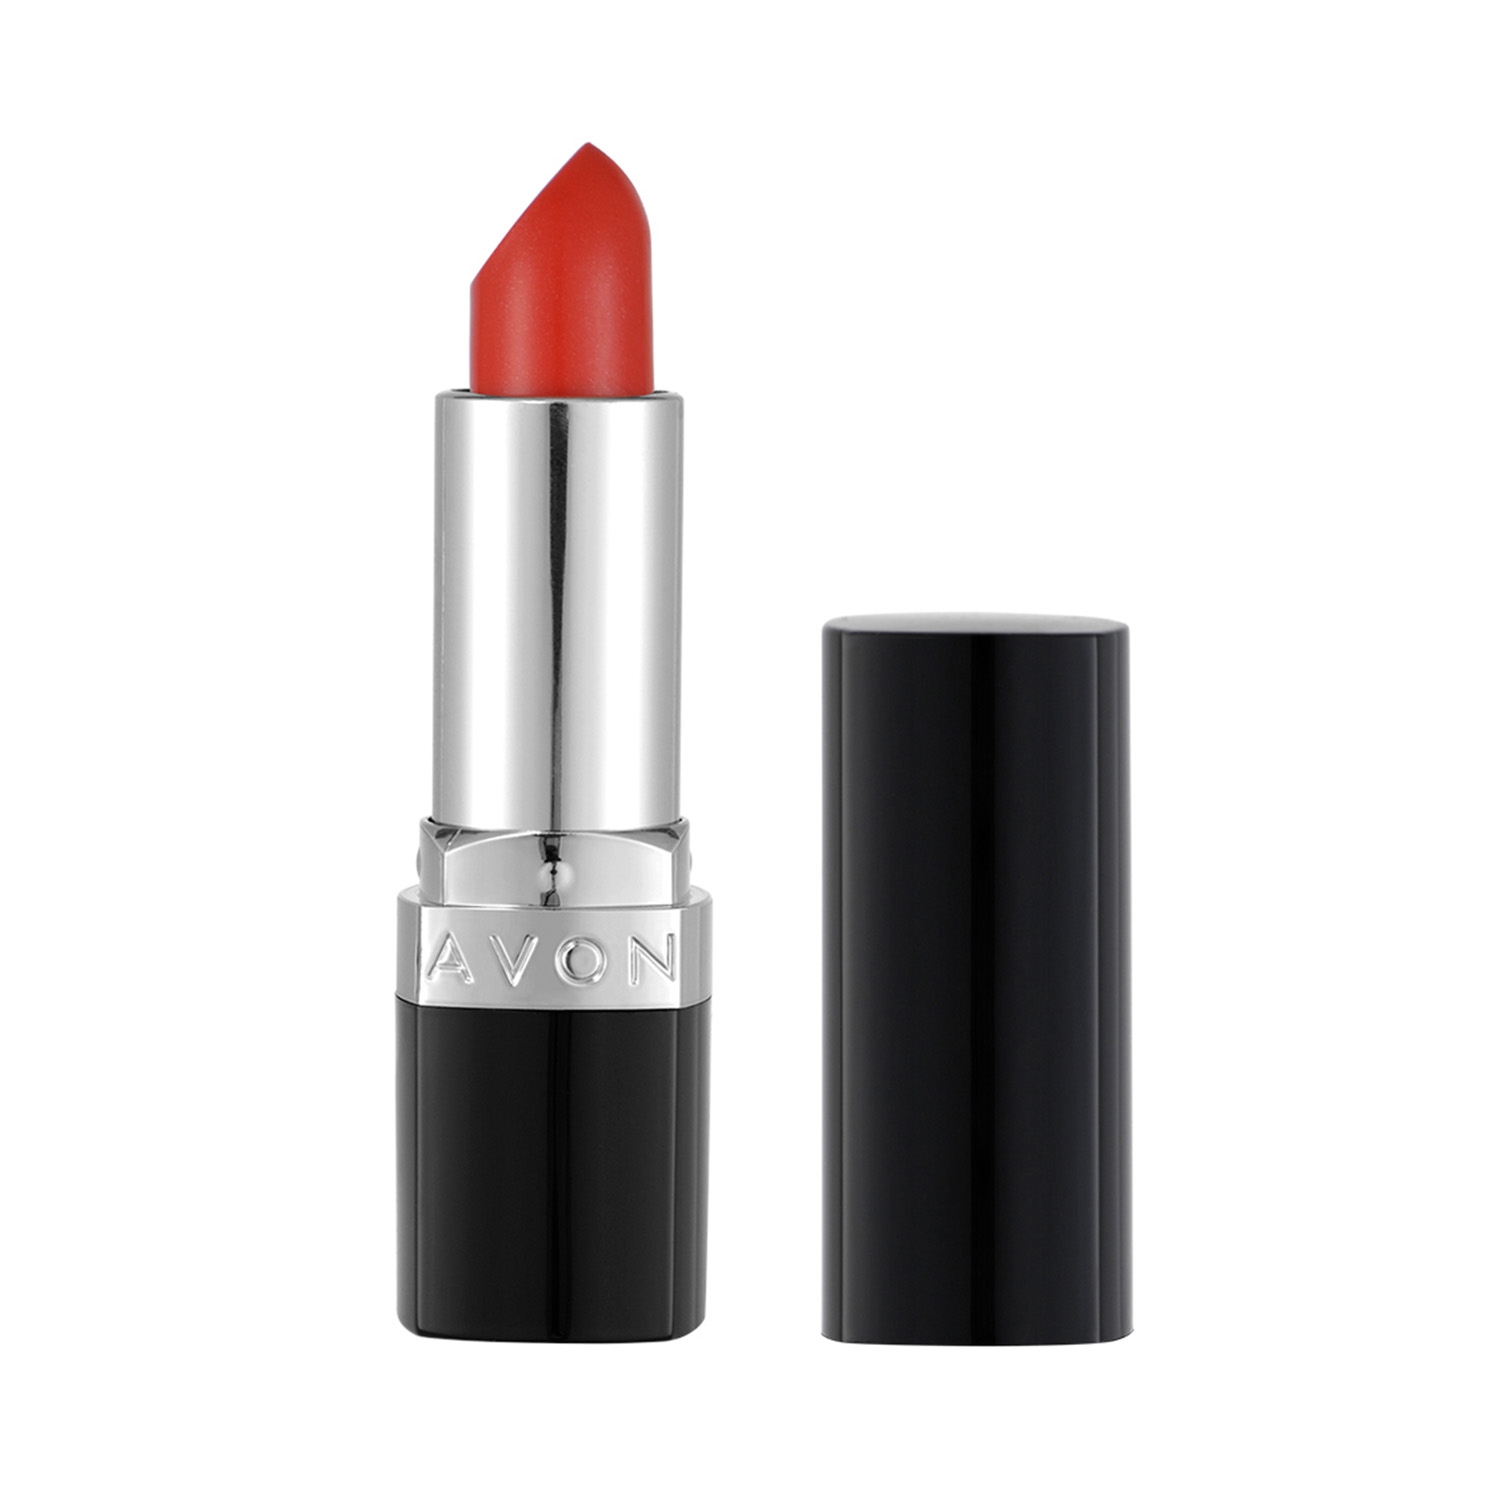 Avon | Avon True Color Lipstick SPF 15 - Tangerine Tango (3.8g)